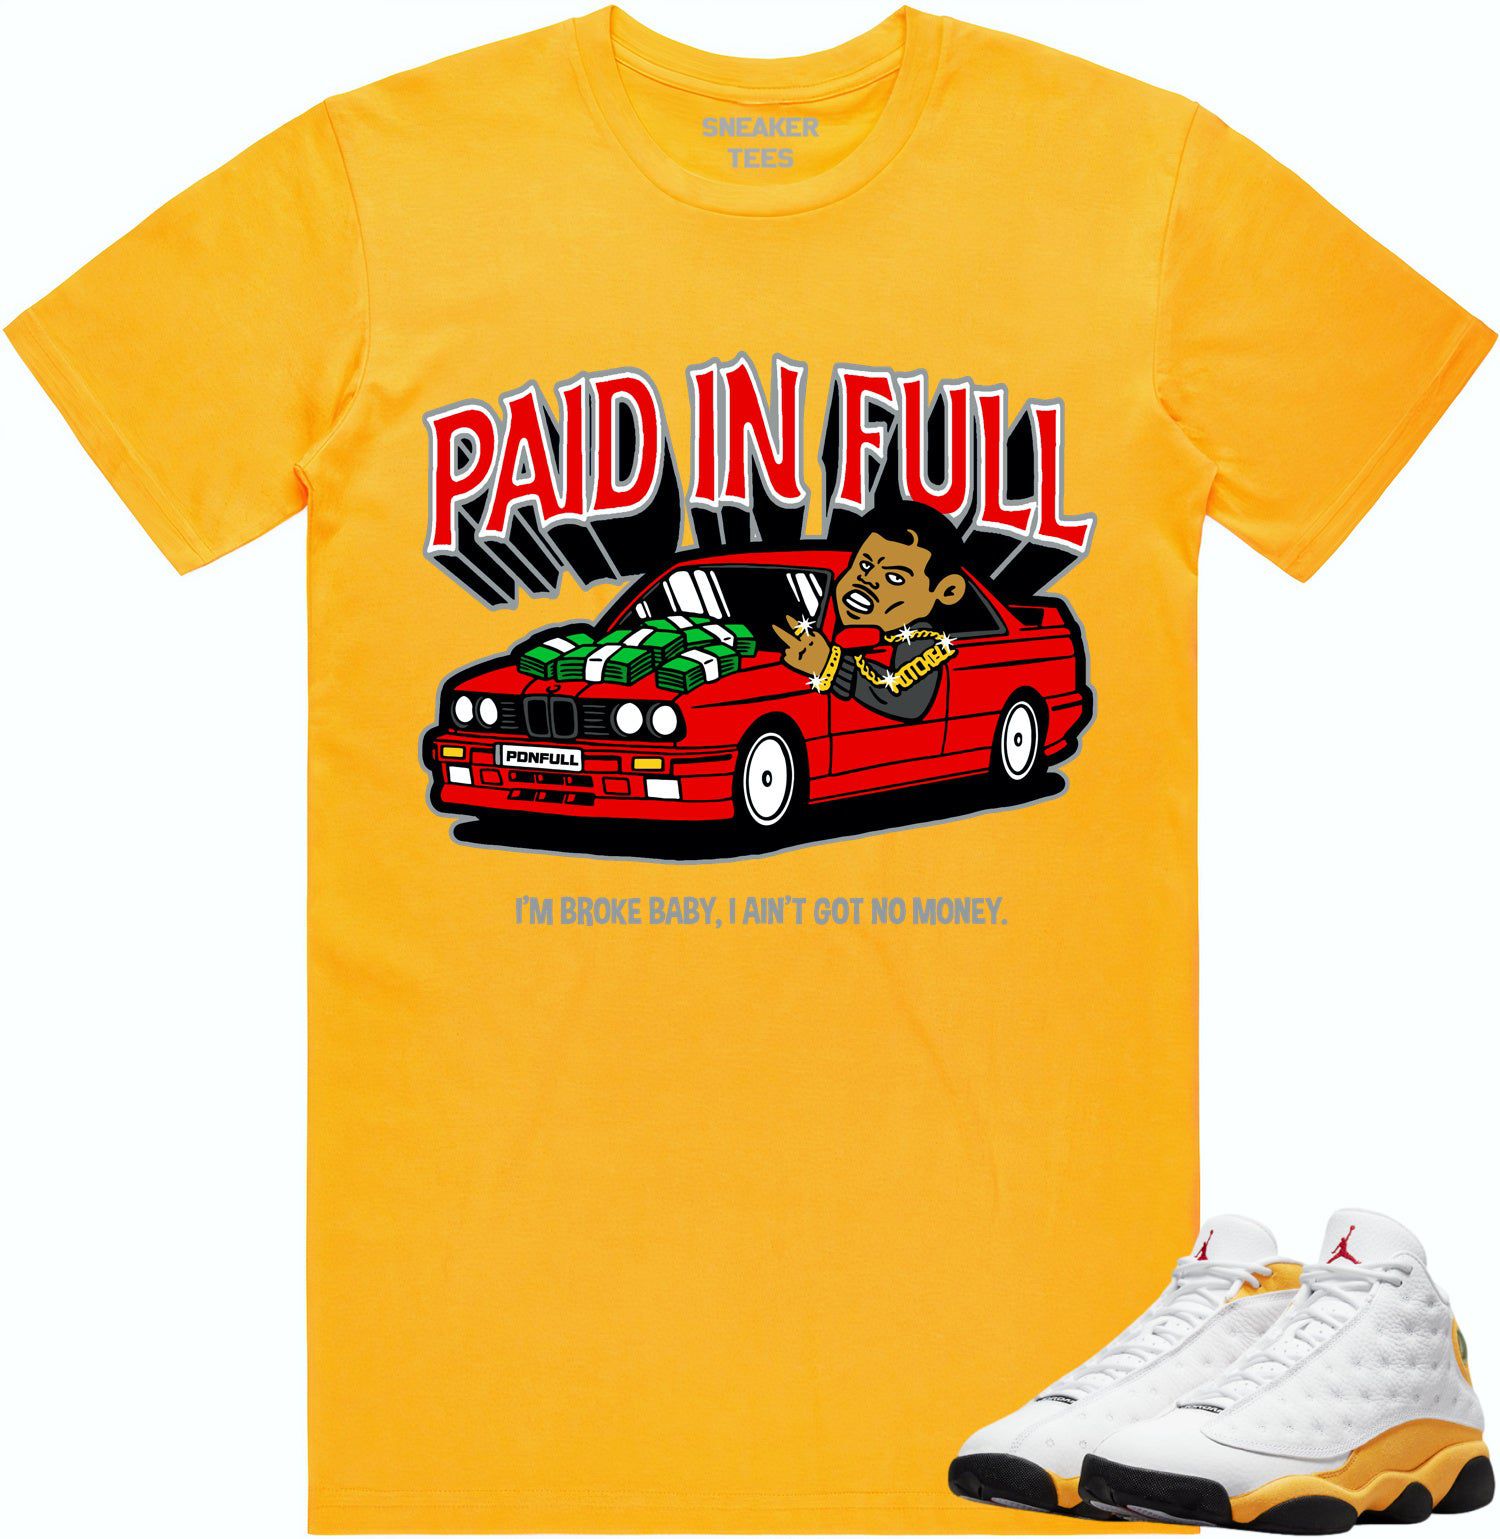 University Gold 13s Shirt - Jordan Retro 13 Sneaker Tees - Red Paid